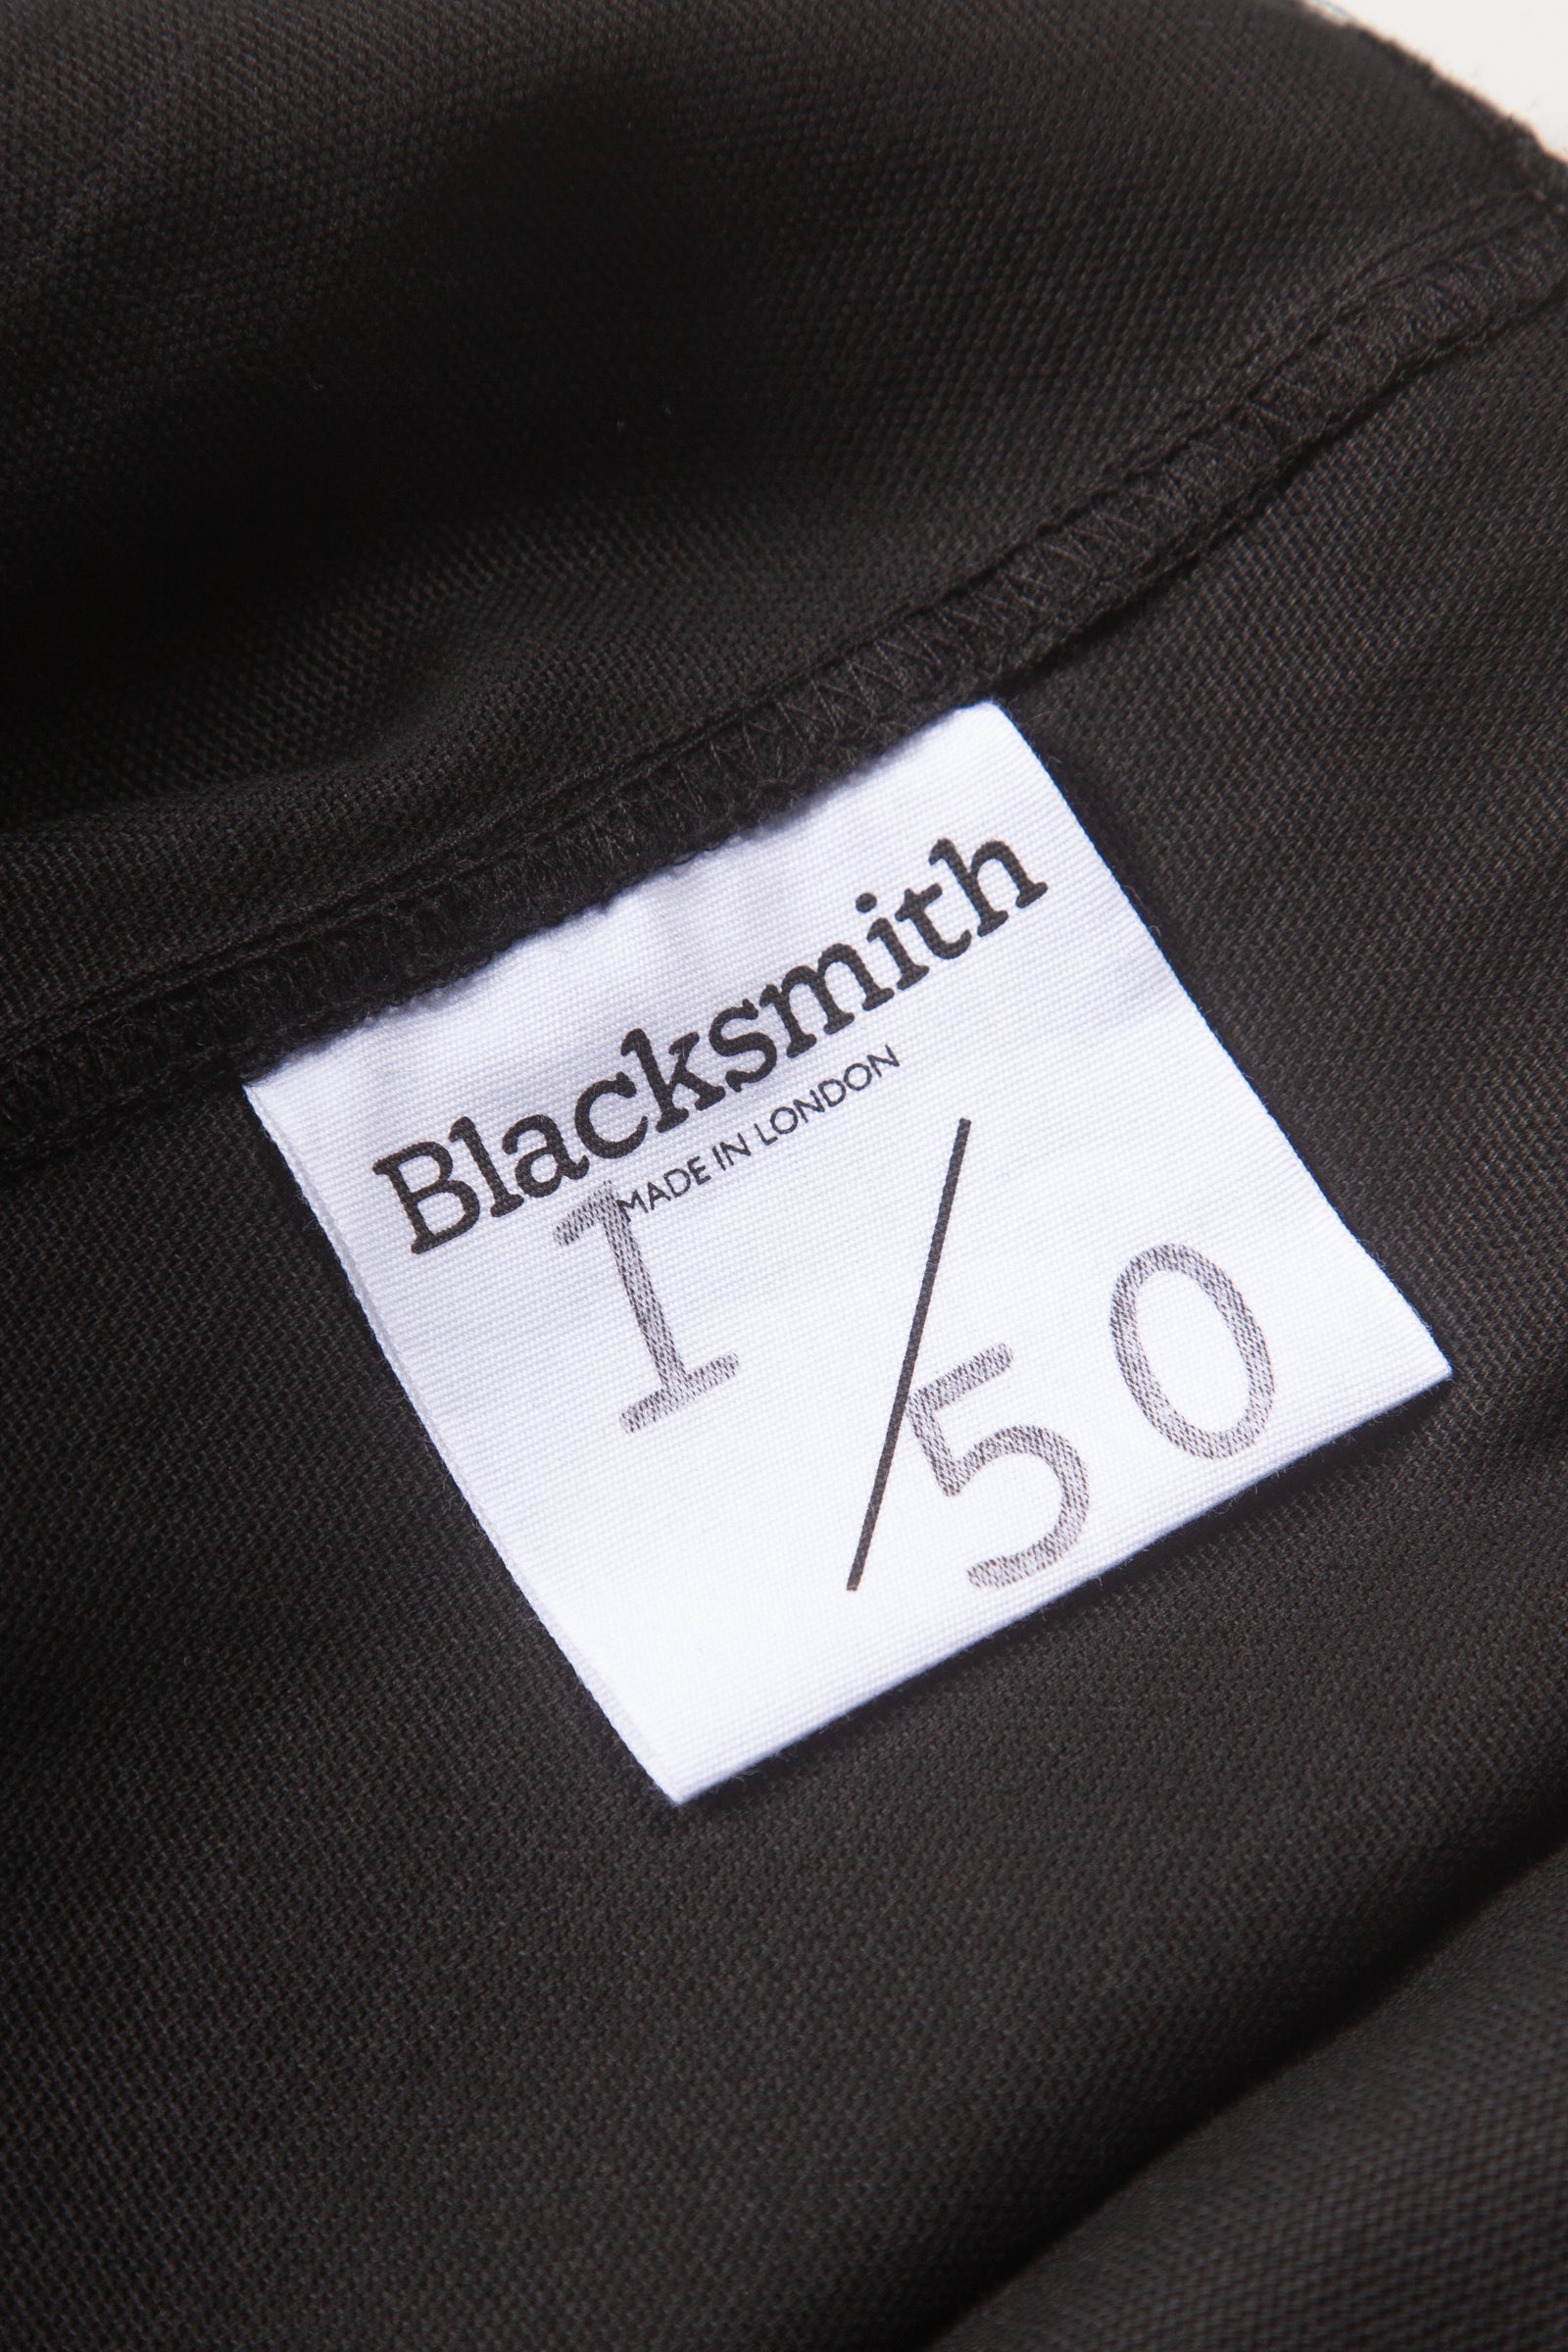 Blacksmith - 001 Canvas Smock - Black